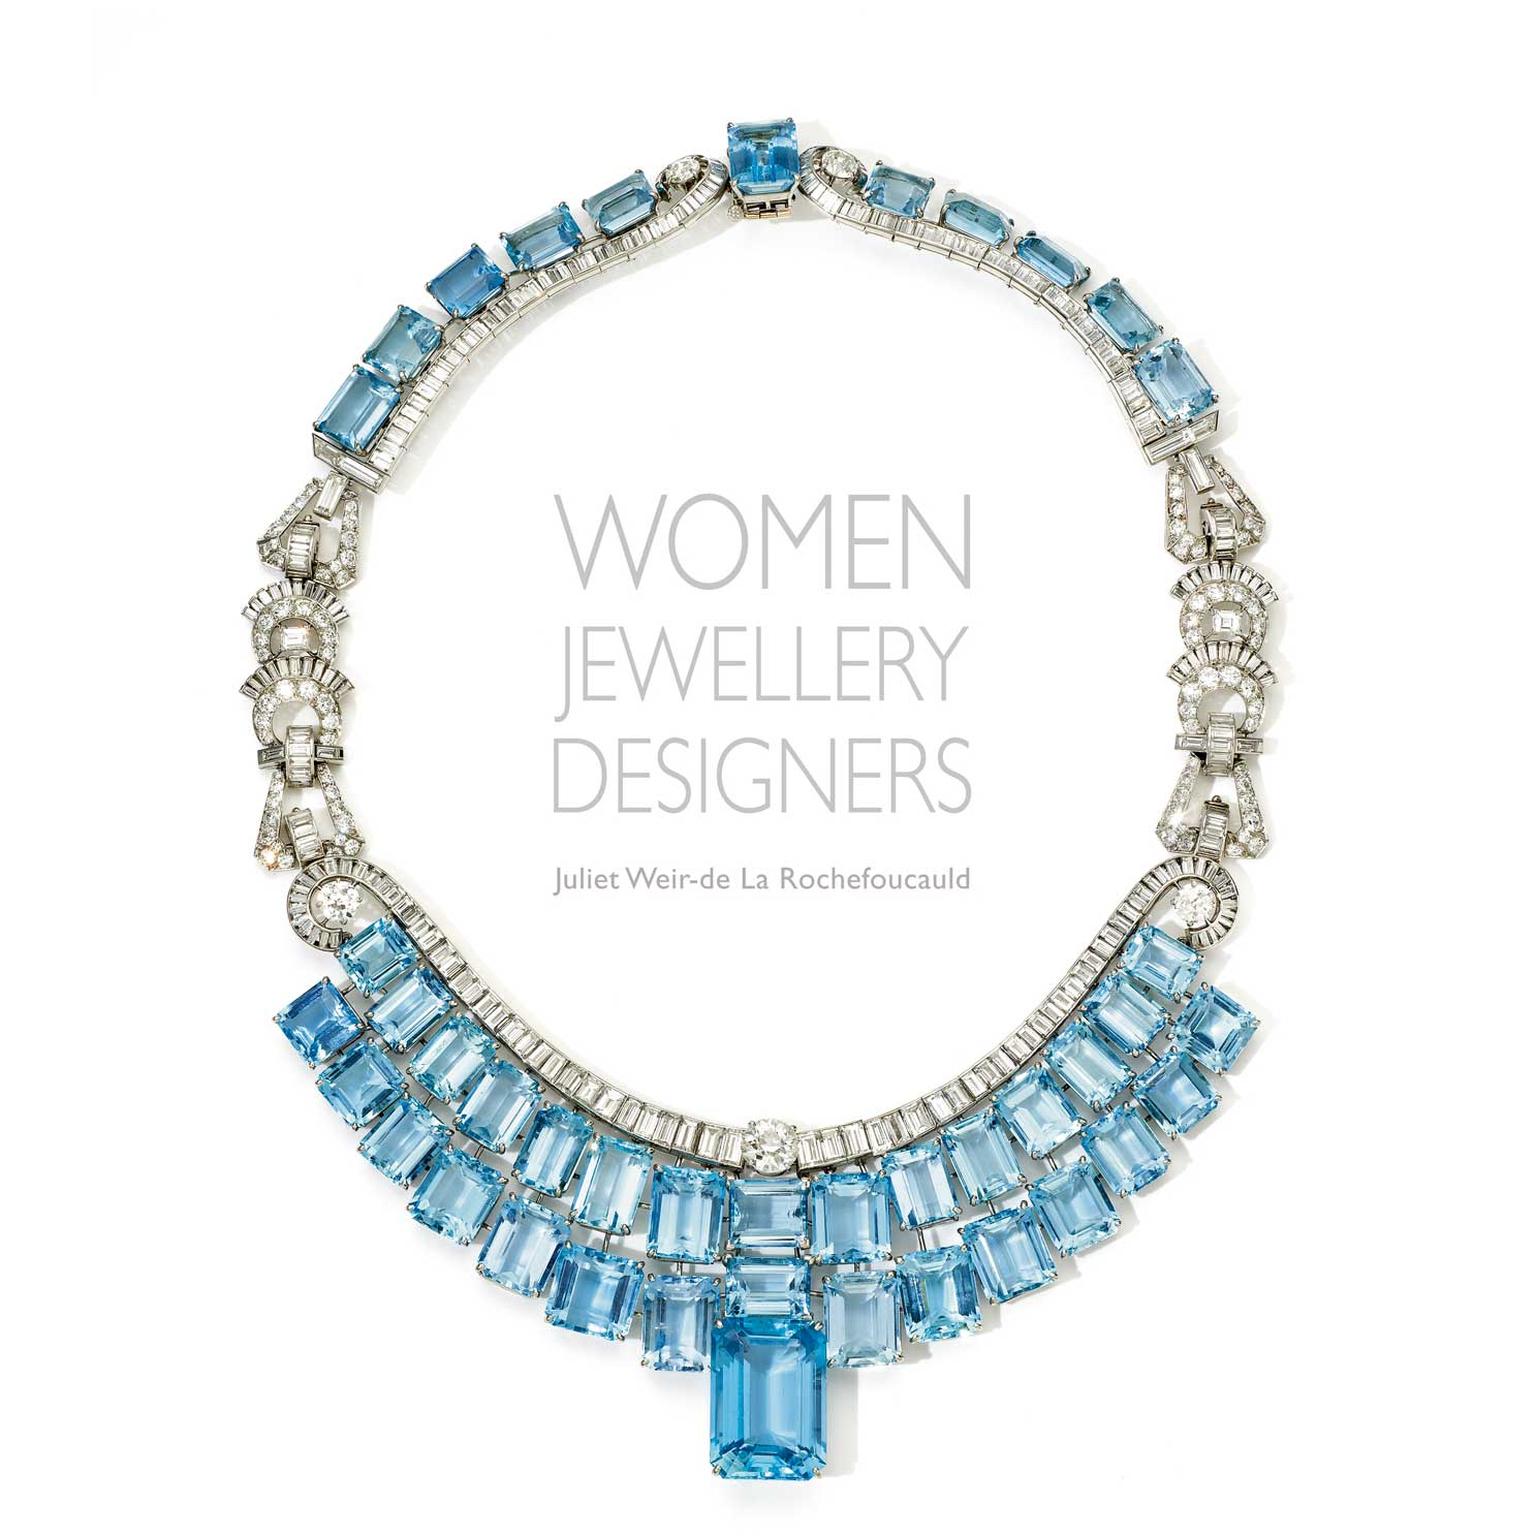 Women Jewellery Designers book cover